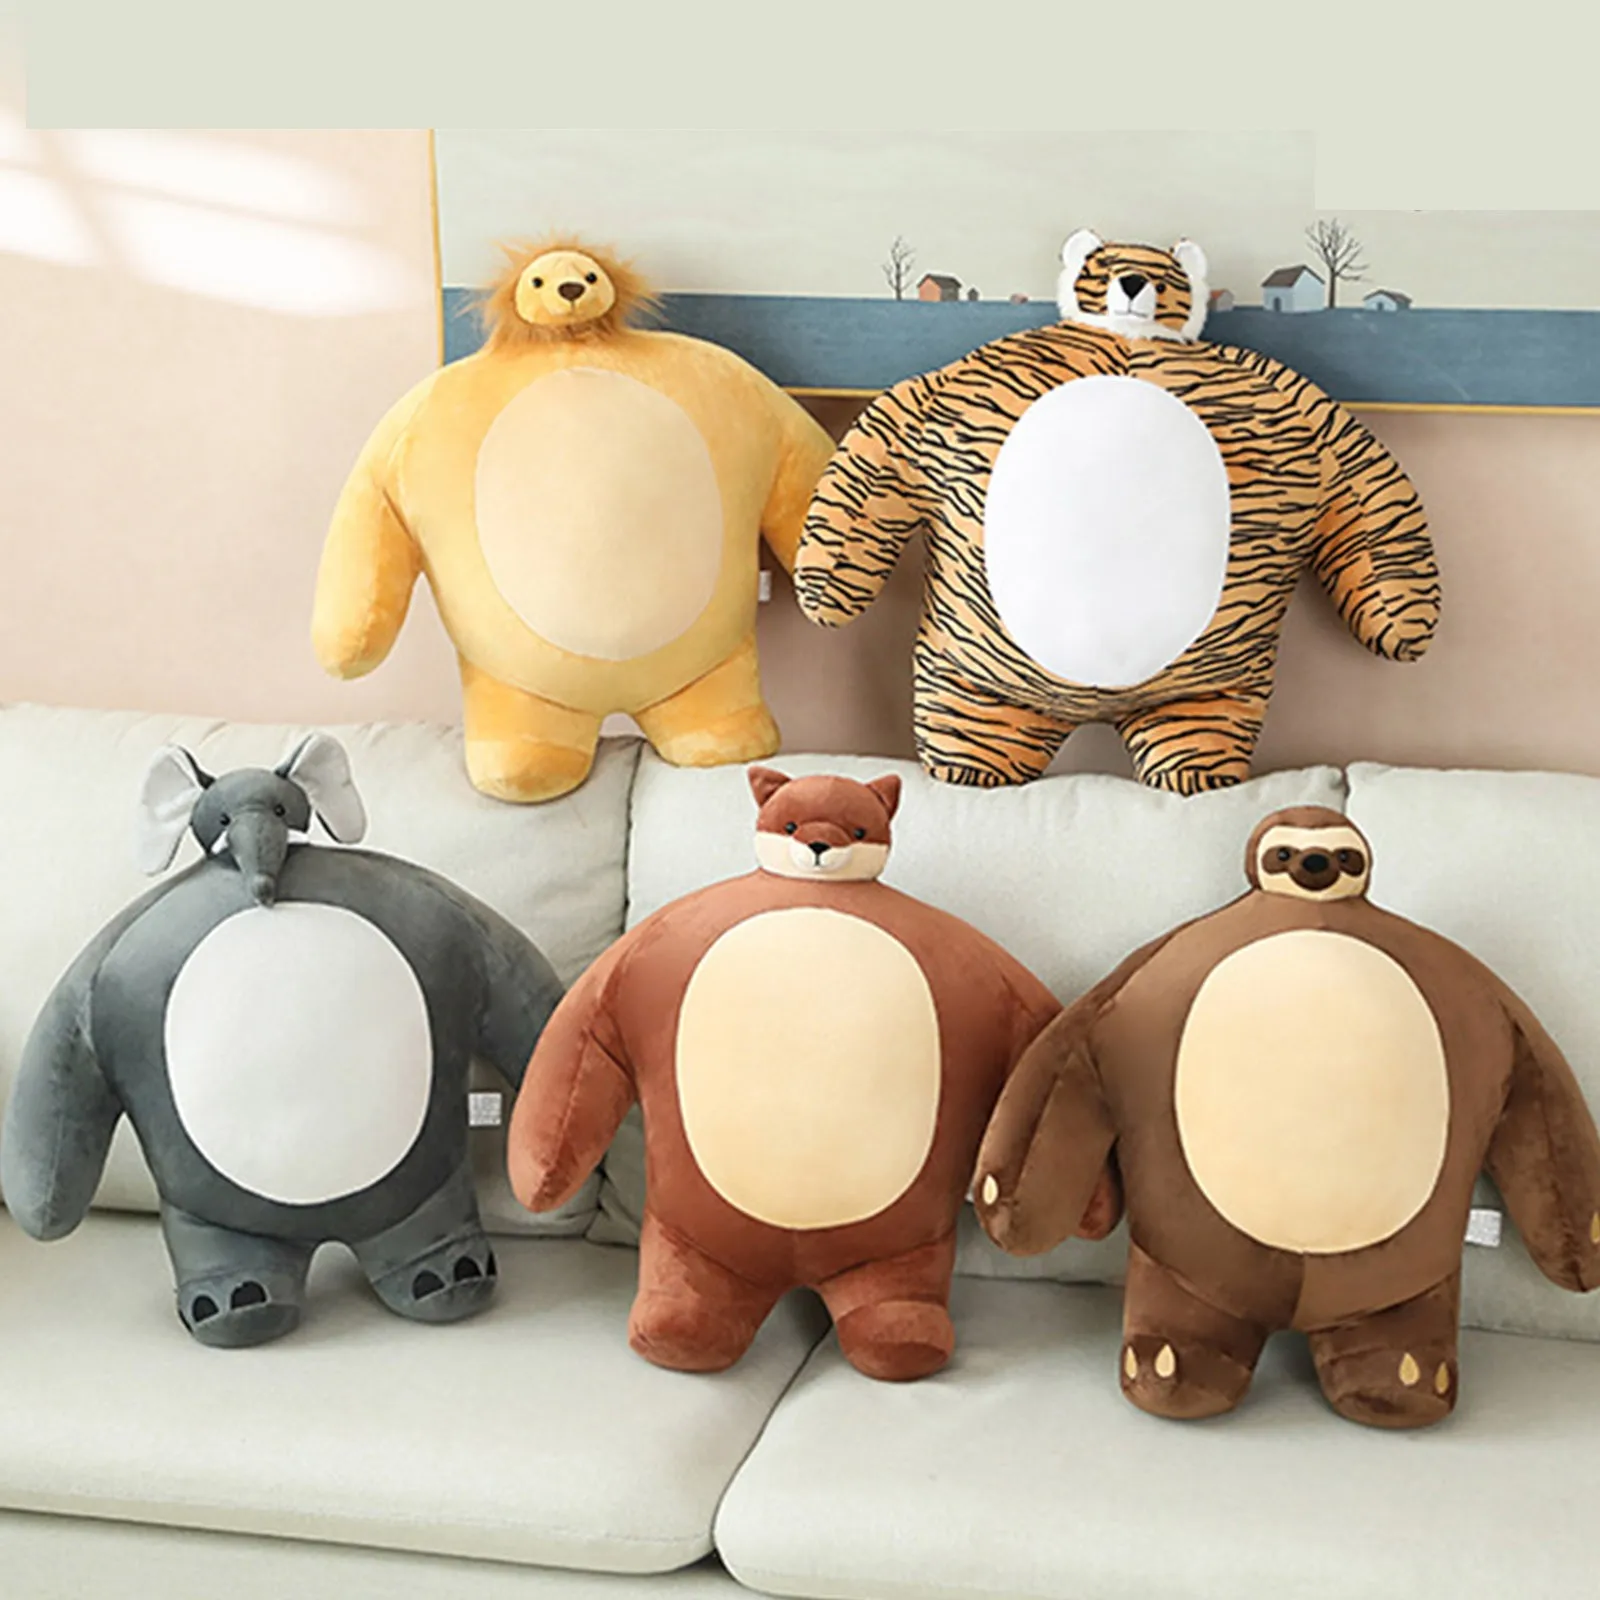 2022 Cute Chubby Animal Plush Toys Kawaii Panda Lion Tiger Stuffed Soft Pillow Plushie Fat Dwen Dwen Doll For Kids Girls Adult